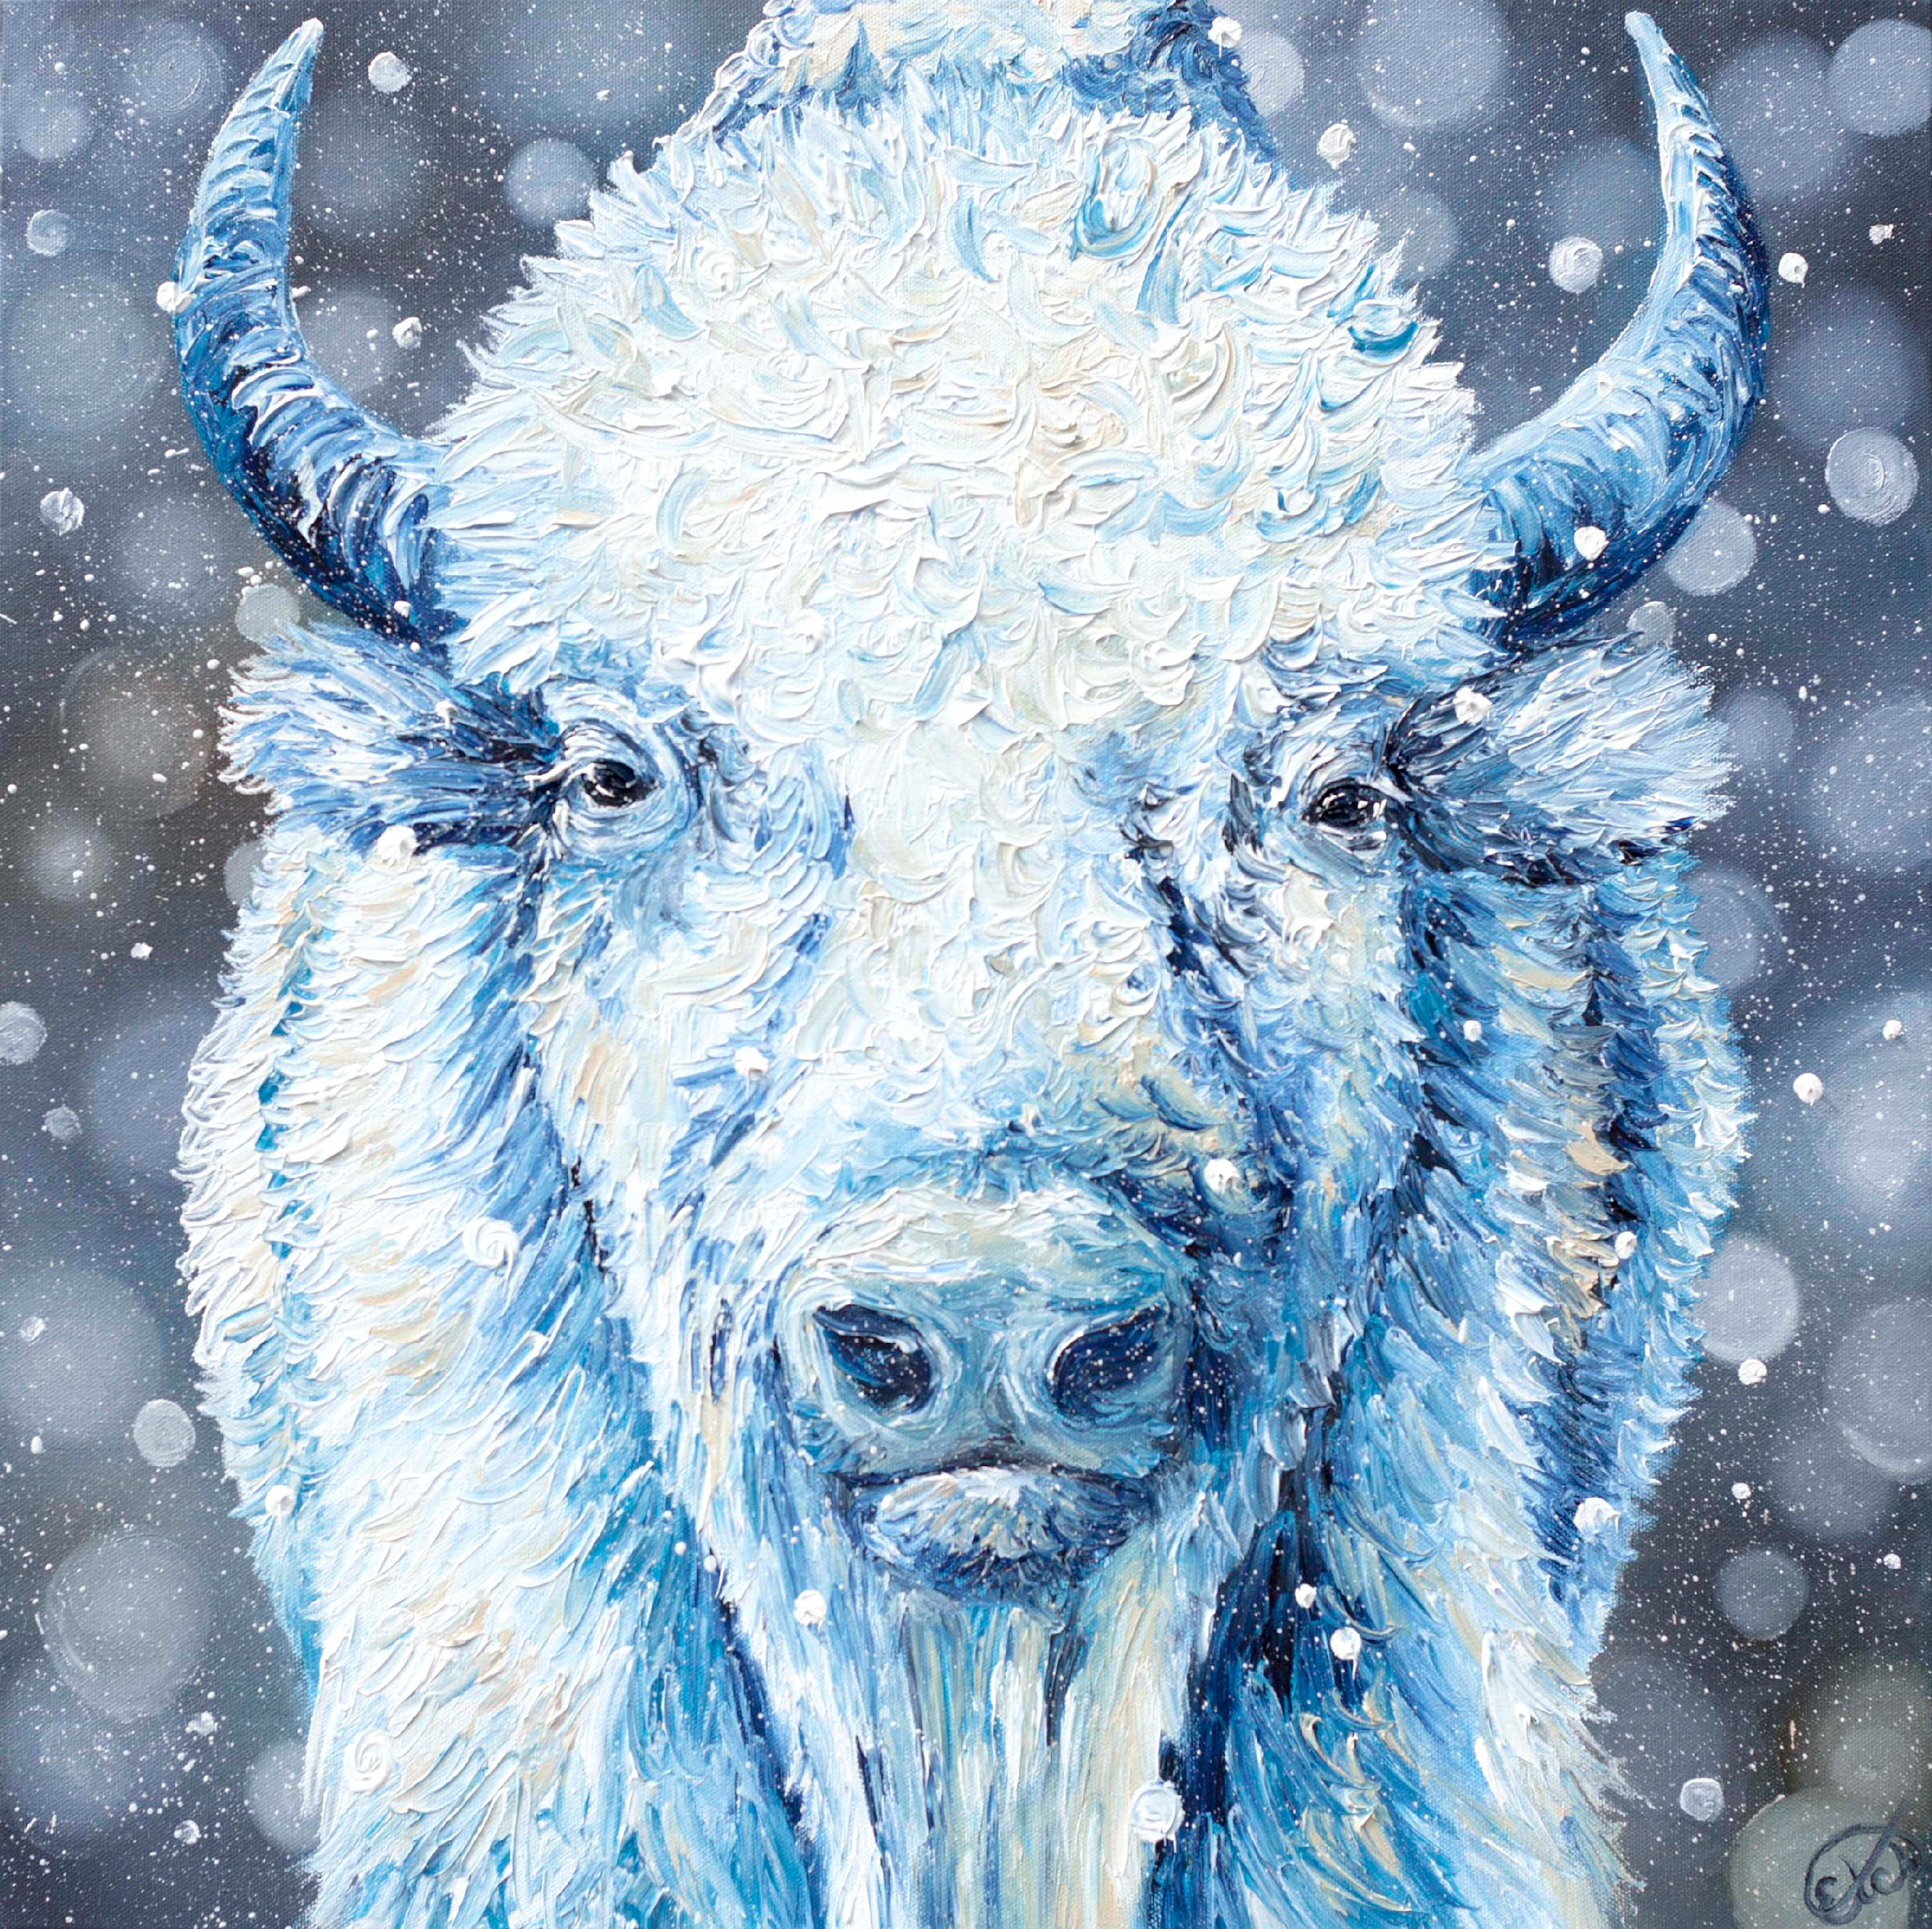 Elizabeth mordensky  spirit buffalo  oil finger painting   24x24 rhyhnm